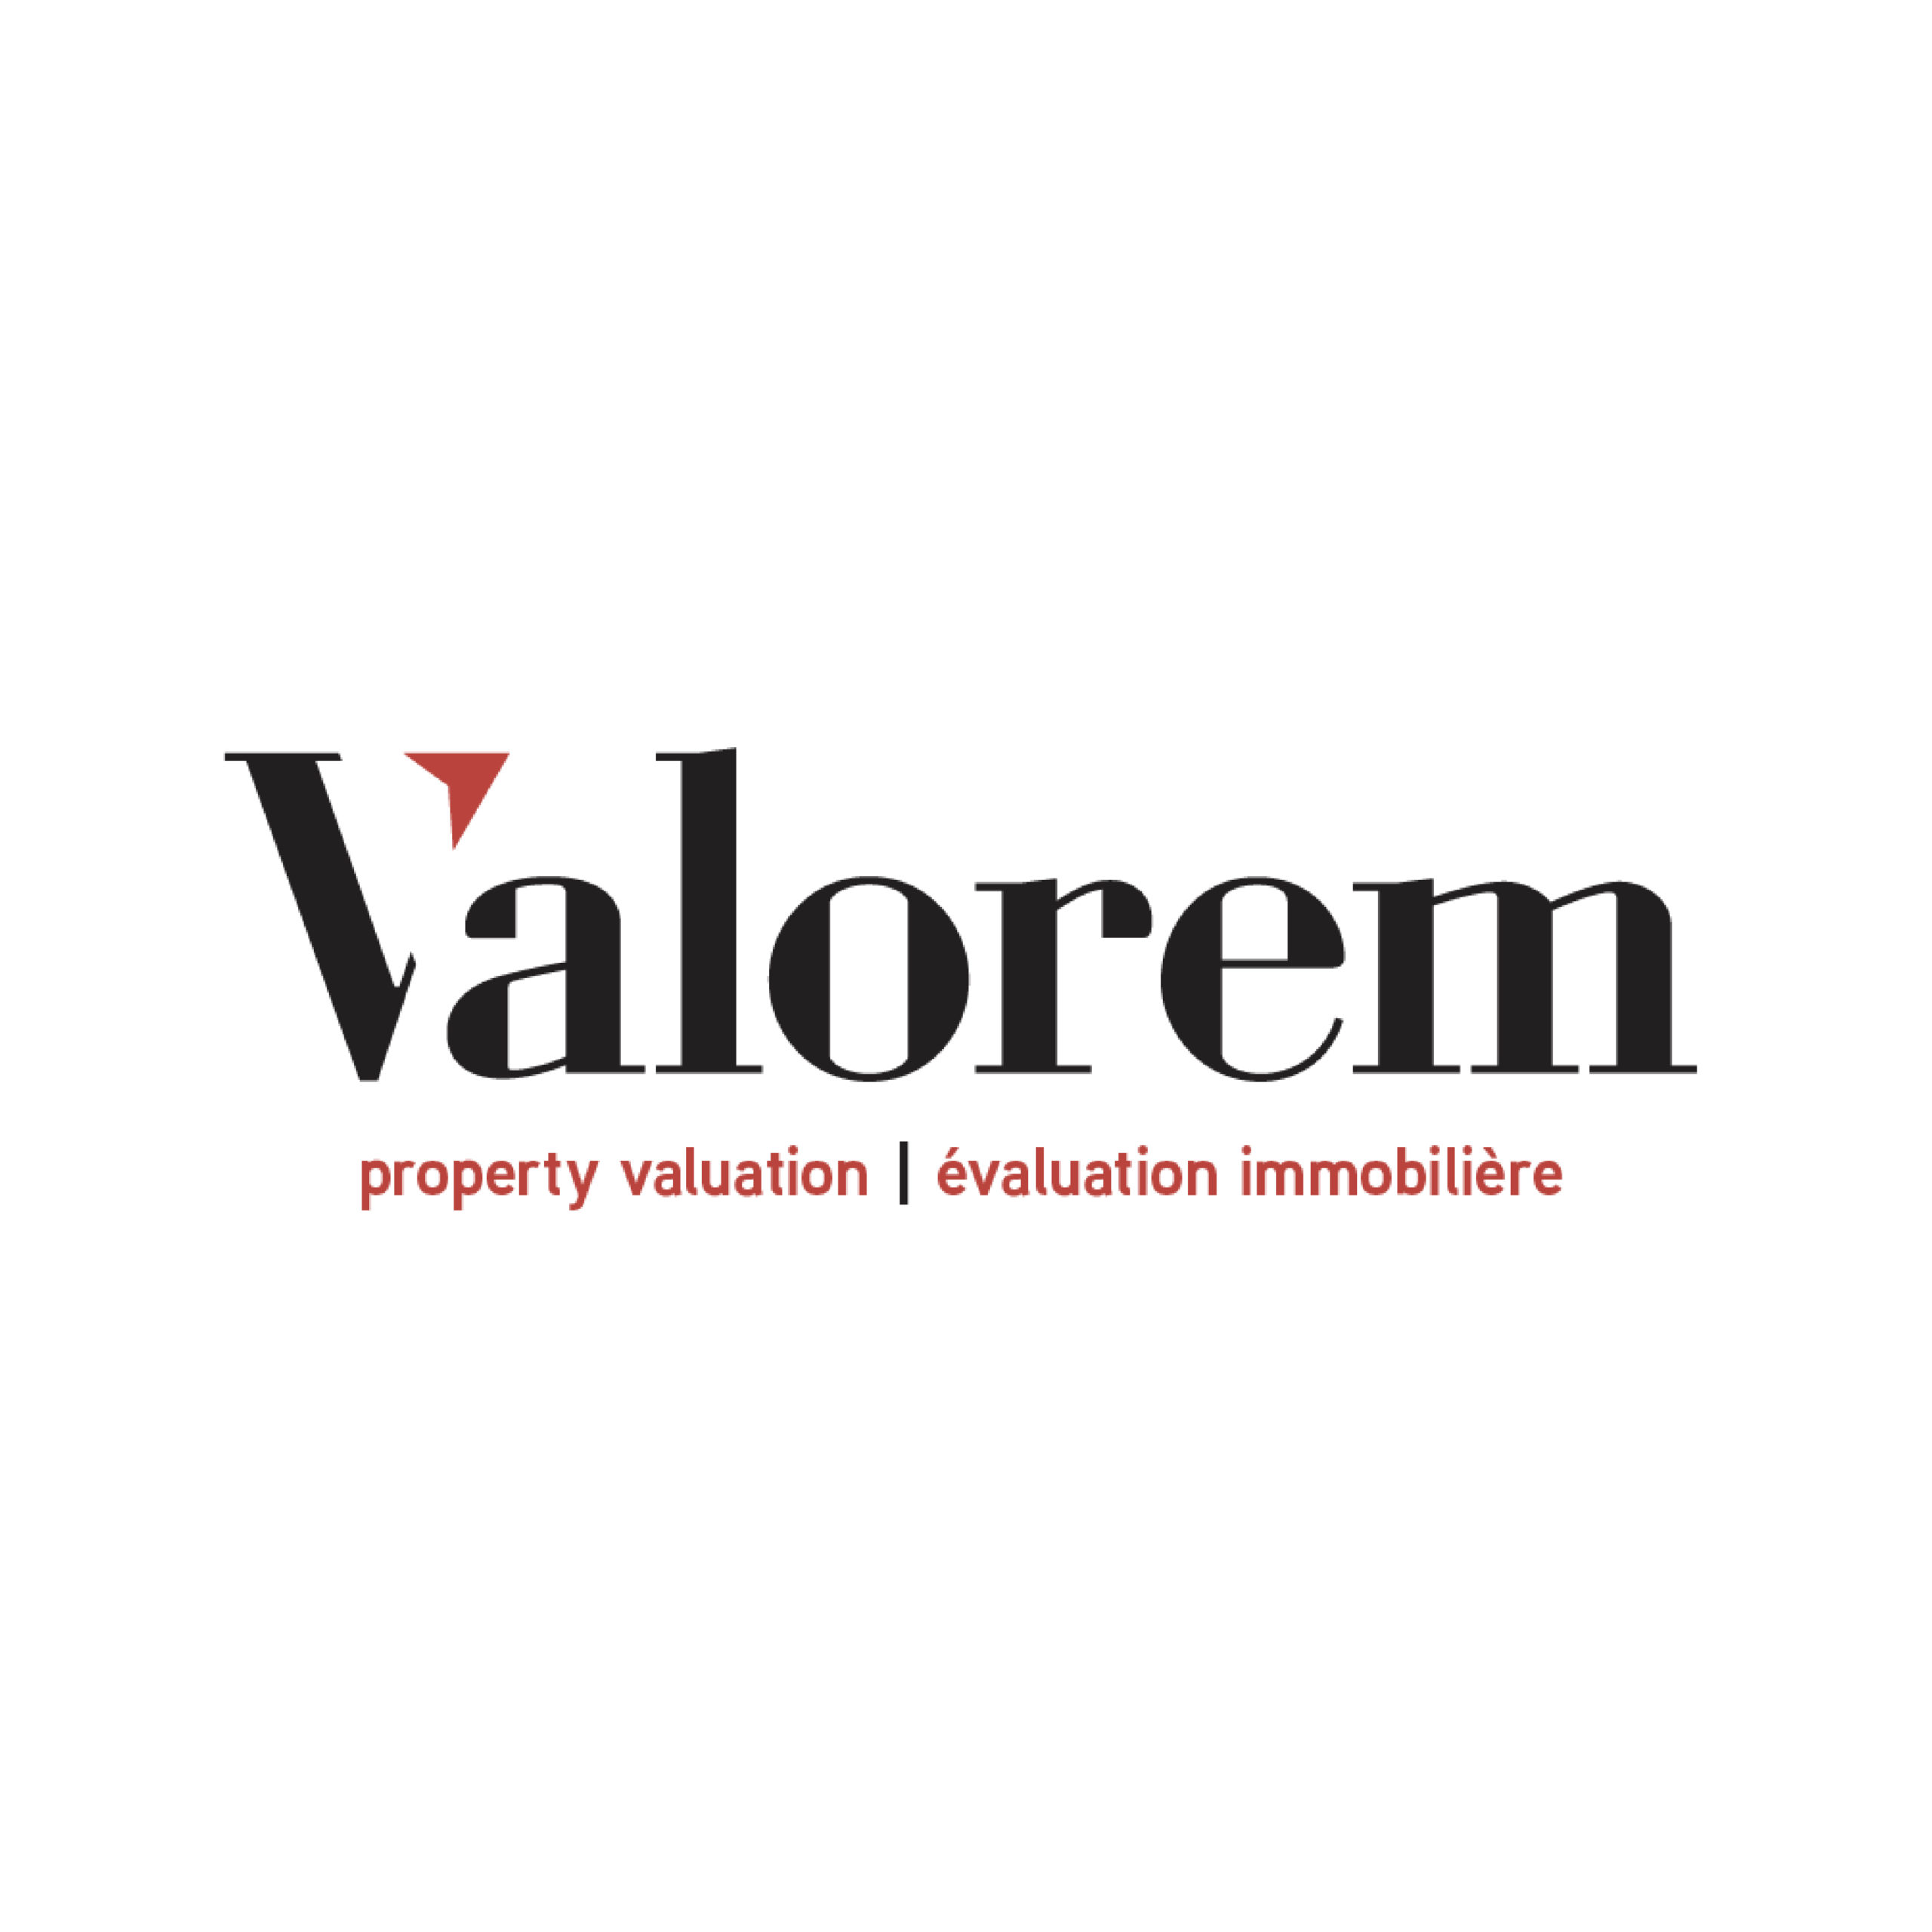 Valorem Logo | Brand